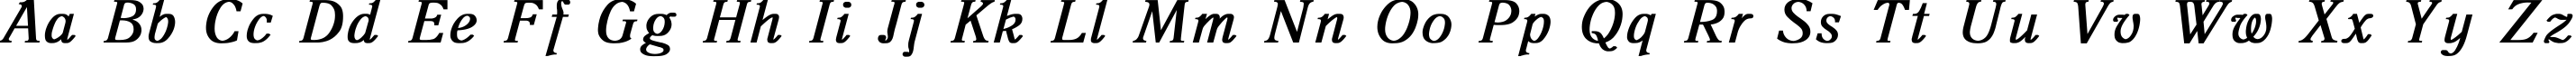 Пример написания английского алфавита шрифтом Antiqua Bold Italic